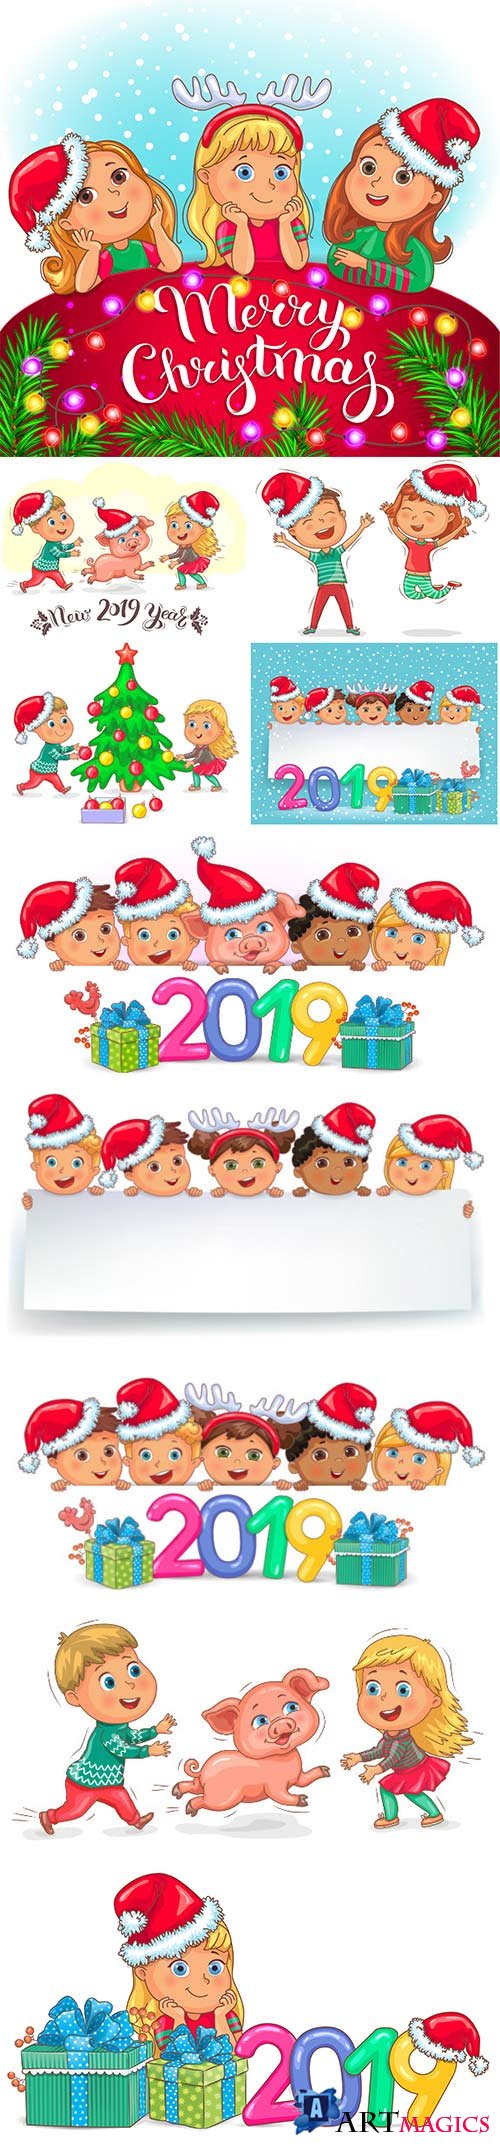 Cute kids and little piggy new year 2019